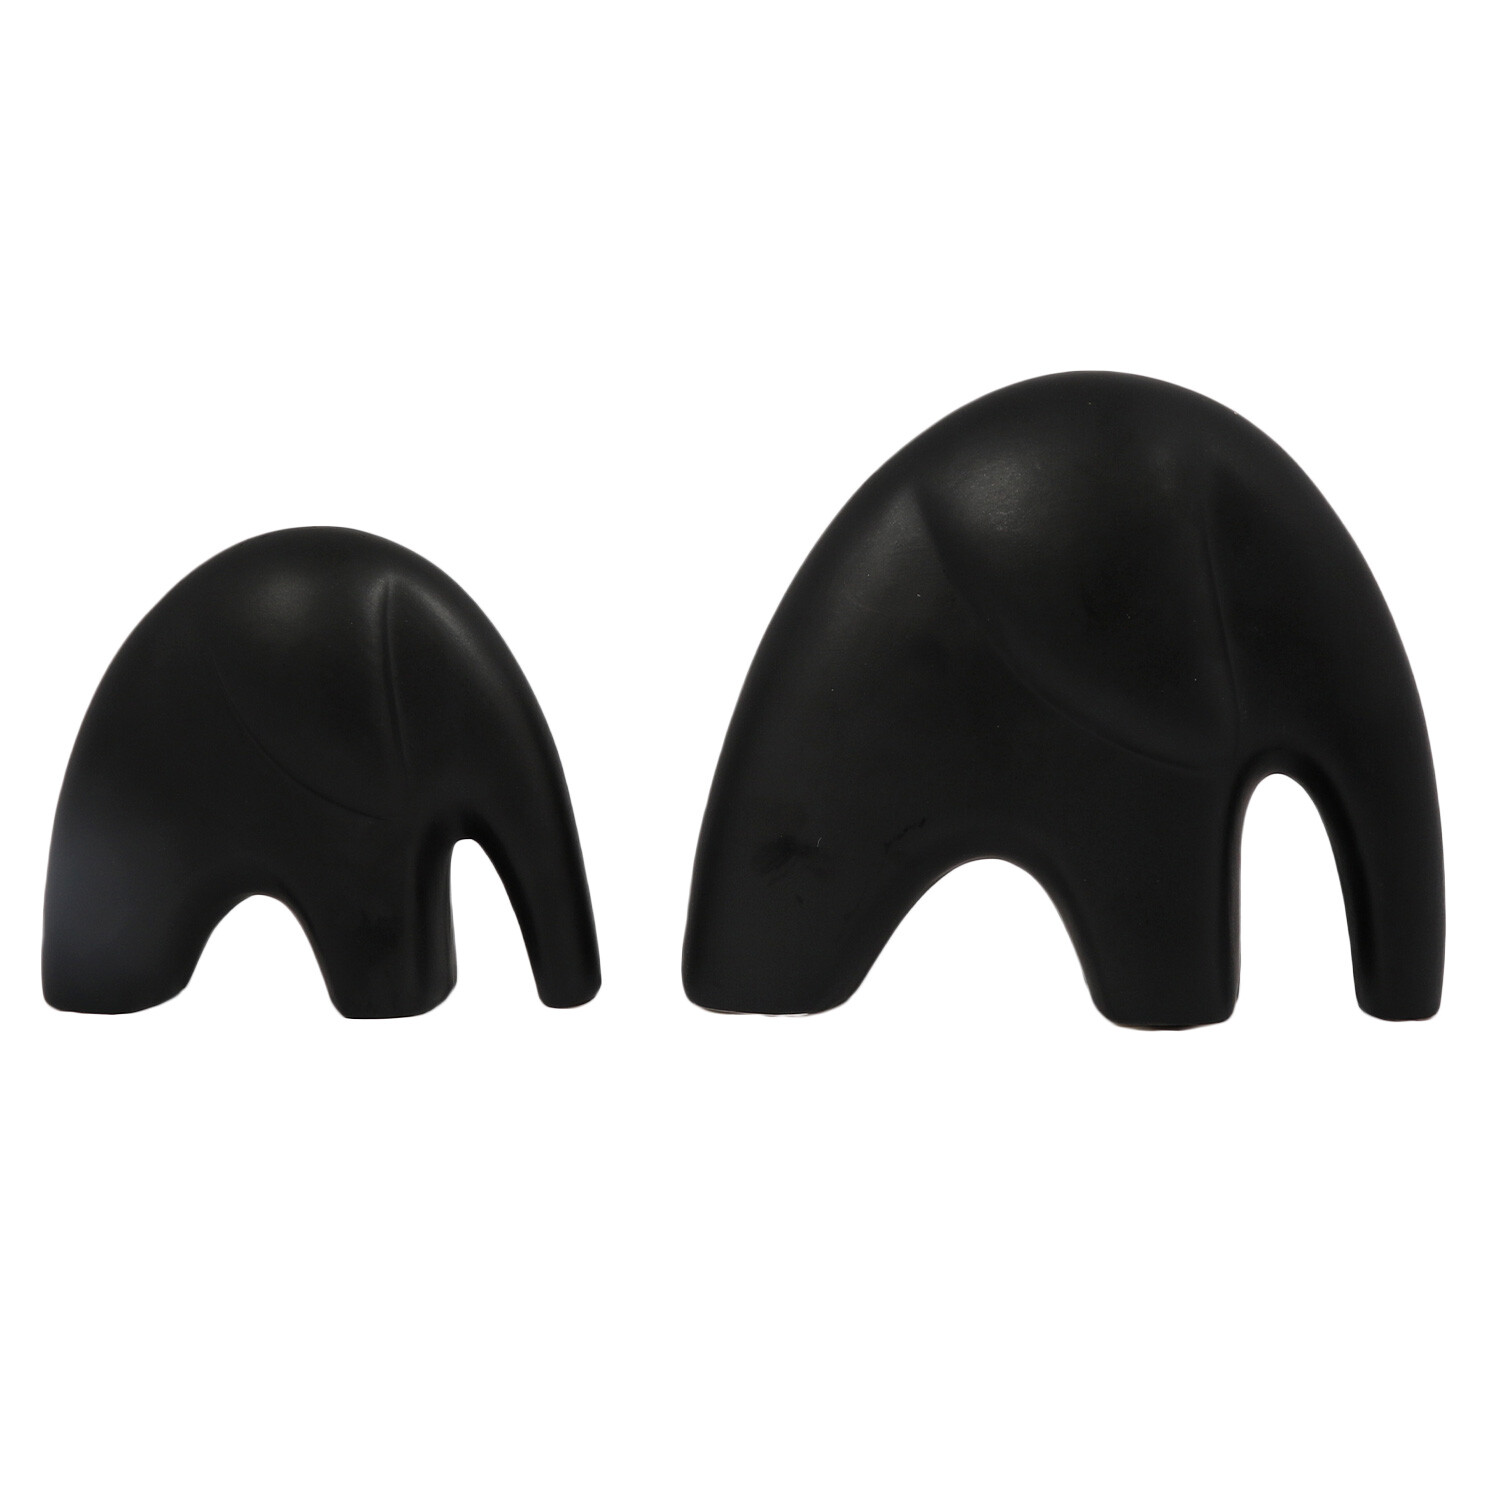 Set of 2 Elephant Ornaments - Black Image 1